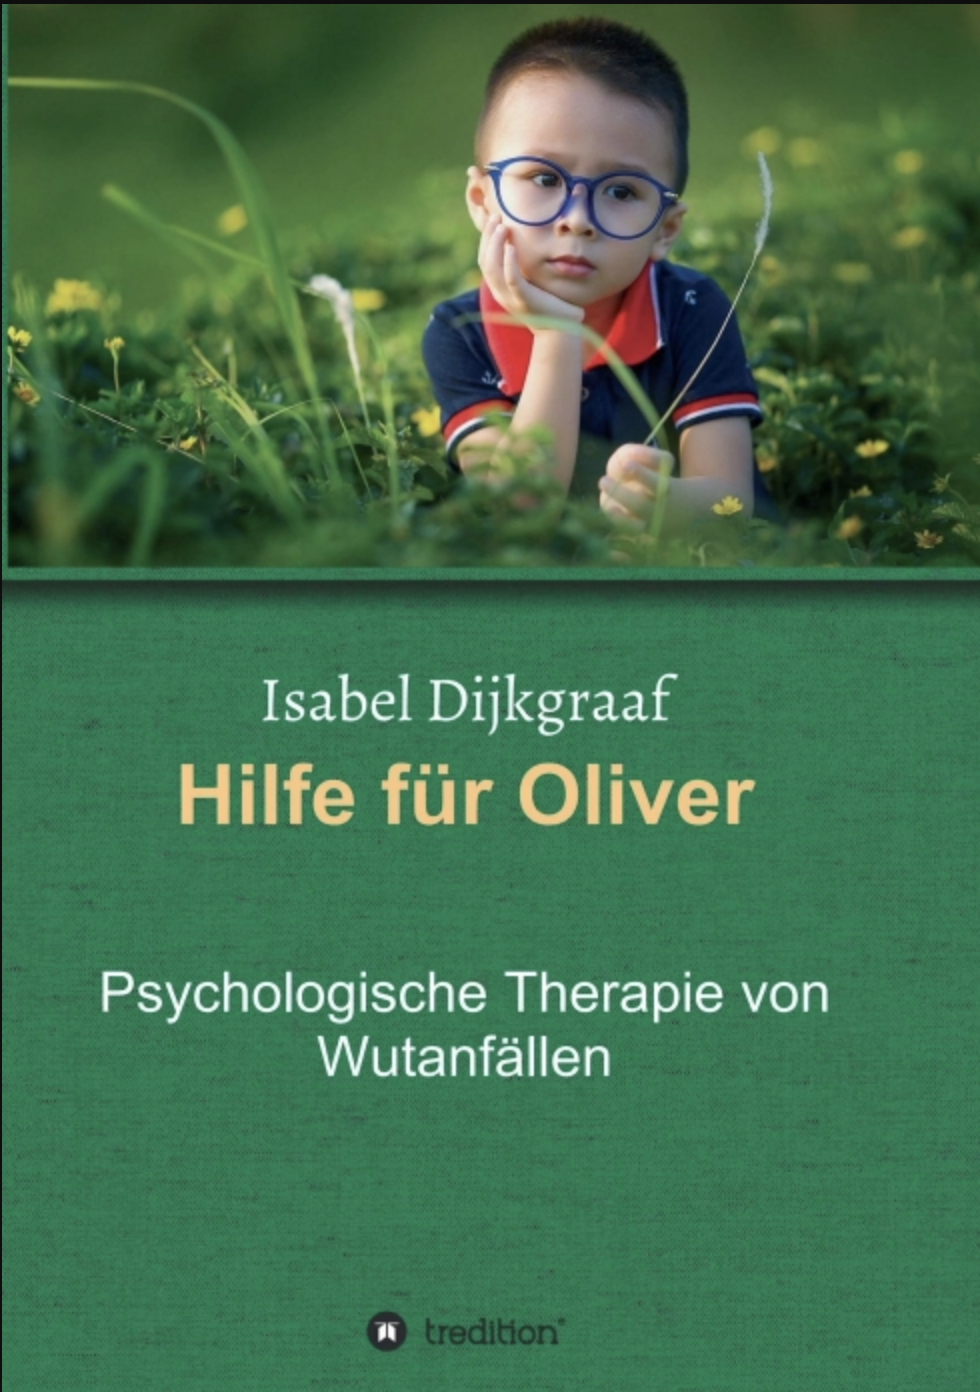 Isabel Dijkgraaf - psychologische Therapie von Wutanfällen Buch